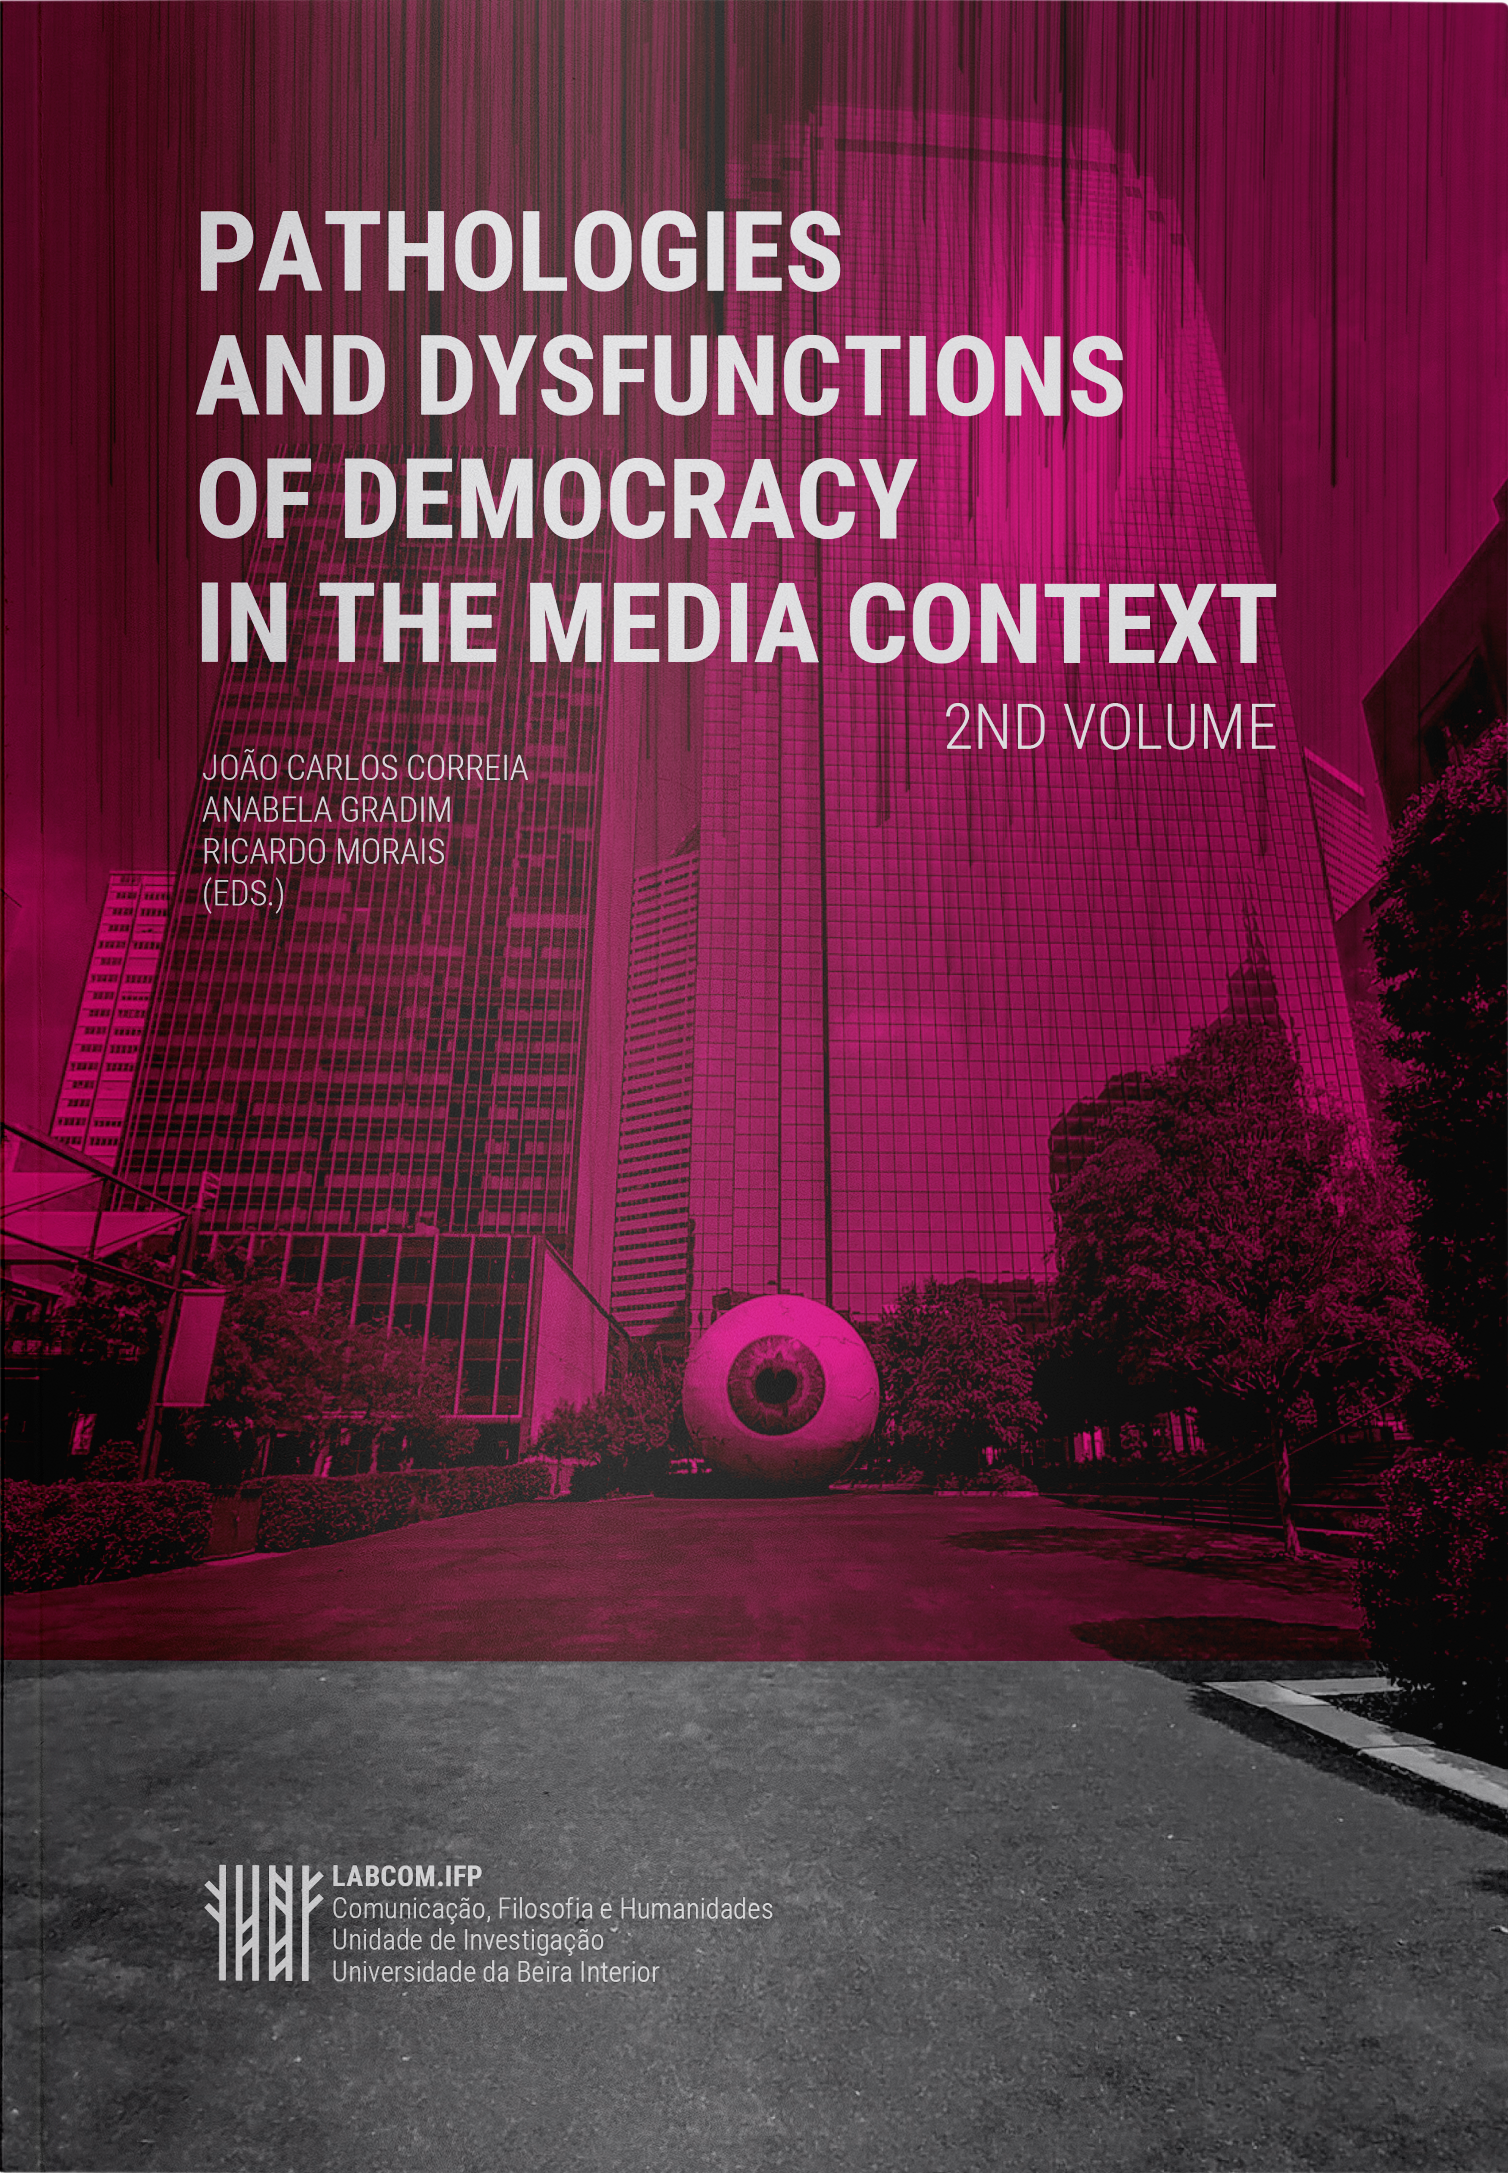 Capa: João Carlos Correia, Anabela Gradim and Ricardo Morais (2020) Pathologies and dysfunctions of democracy in the media context - 2nd volume. Communication  +  Philosophy  +  Humanities. .